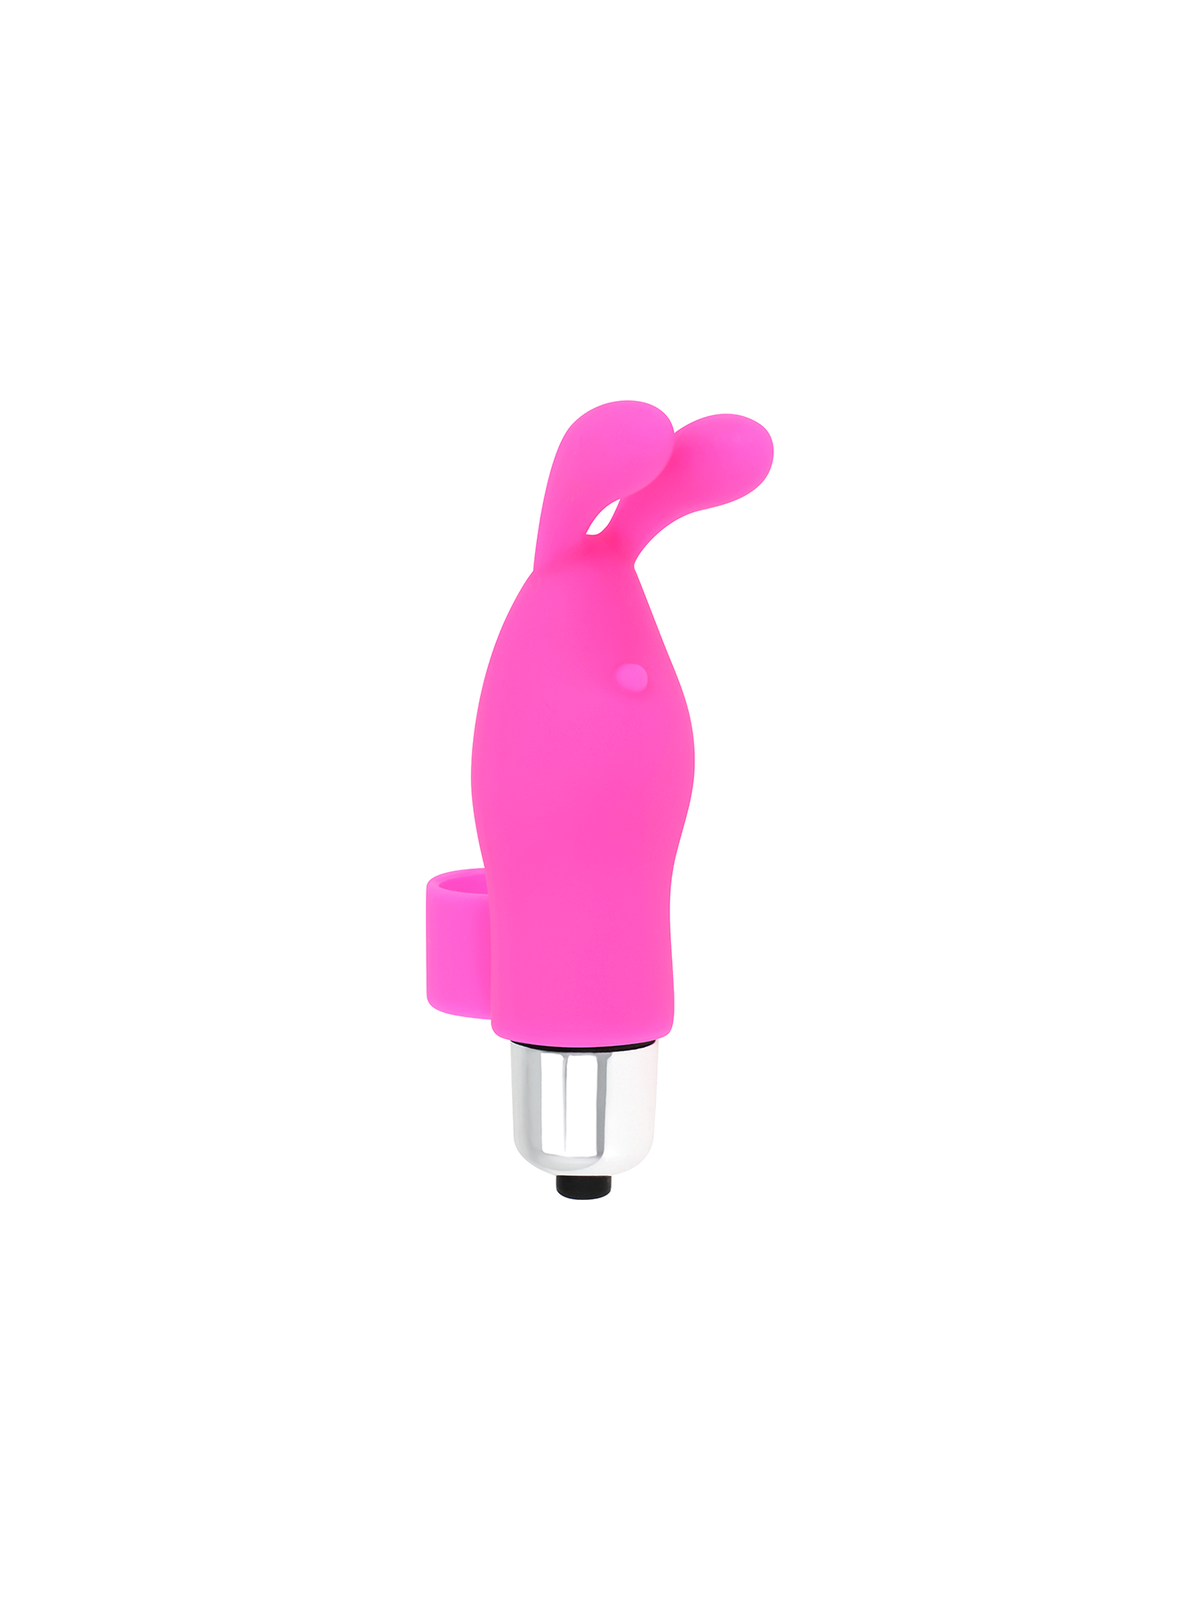 Ohmama Dedal Estimulador Con Rabbit - Comprar Dedo vibrador Ohmama - Vibradores de dedo (1)